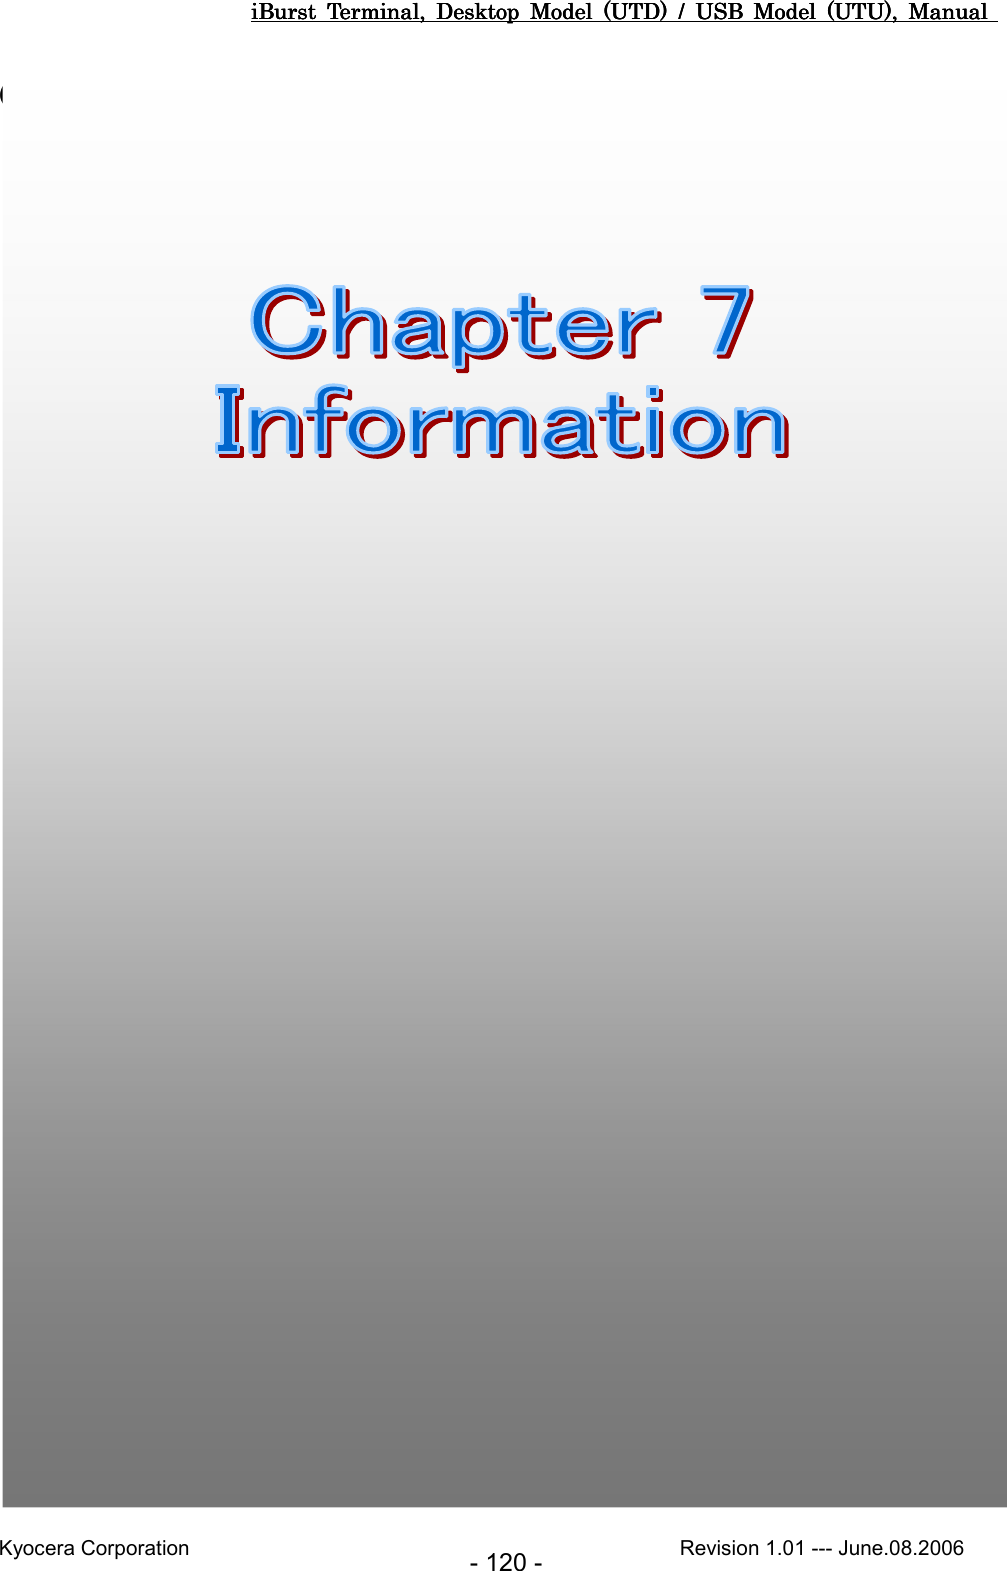 iBurst  Terminal,  Desktop  Model  (UTD)  /  USB  Model  (UTU),  Manual iBurst  Terminal,  Desktop  Model  (UTD)  /  USB  Model  (UTU),  Manual iBurst  Terminal,  Desktop  Model  (UTD)  /  USB  Model  (UTU),  Manual iBurst  Terminal,  Desktop  Model  (UTD)  /  USB  Model  (UTU),  Manual       Kyocera Corporation                                                                                              Revision 1.01 --- June.08.2006 - 120 - Chapter Chapter Chapter Chapter 7777 In In In Informationformationformationformation        